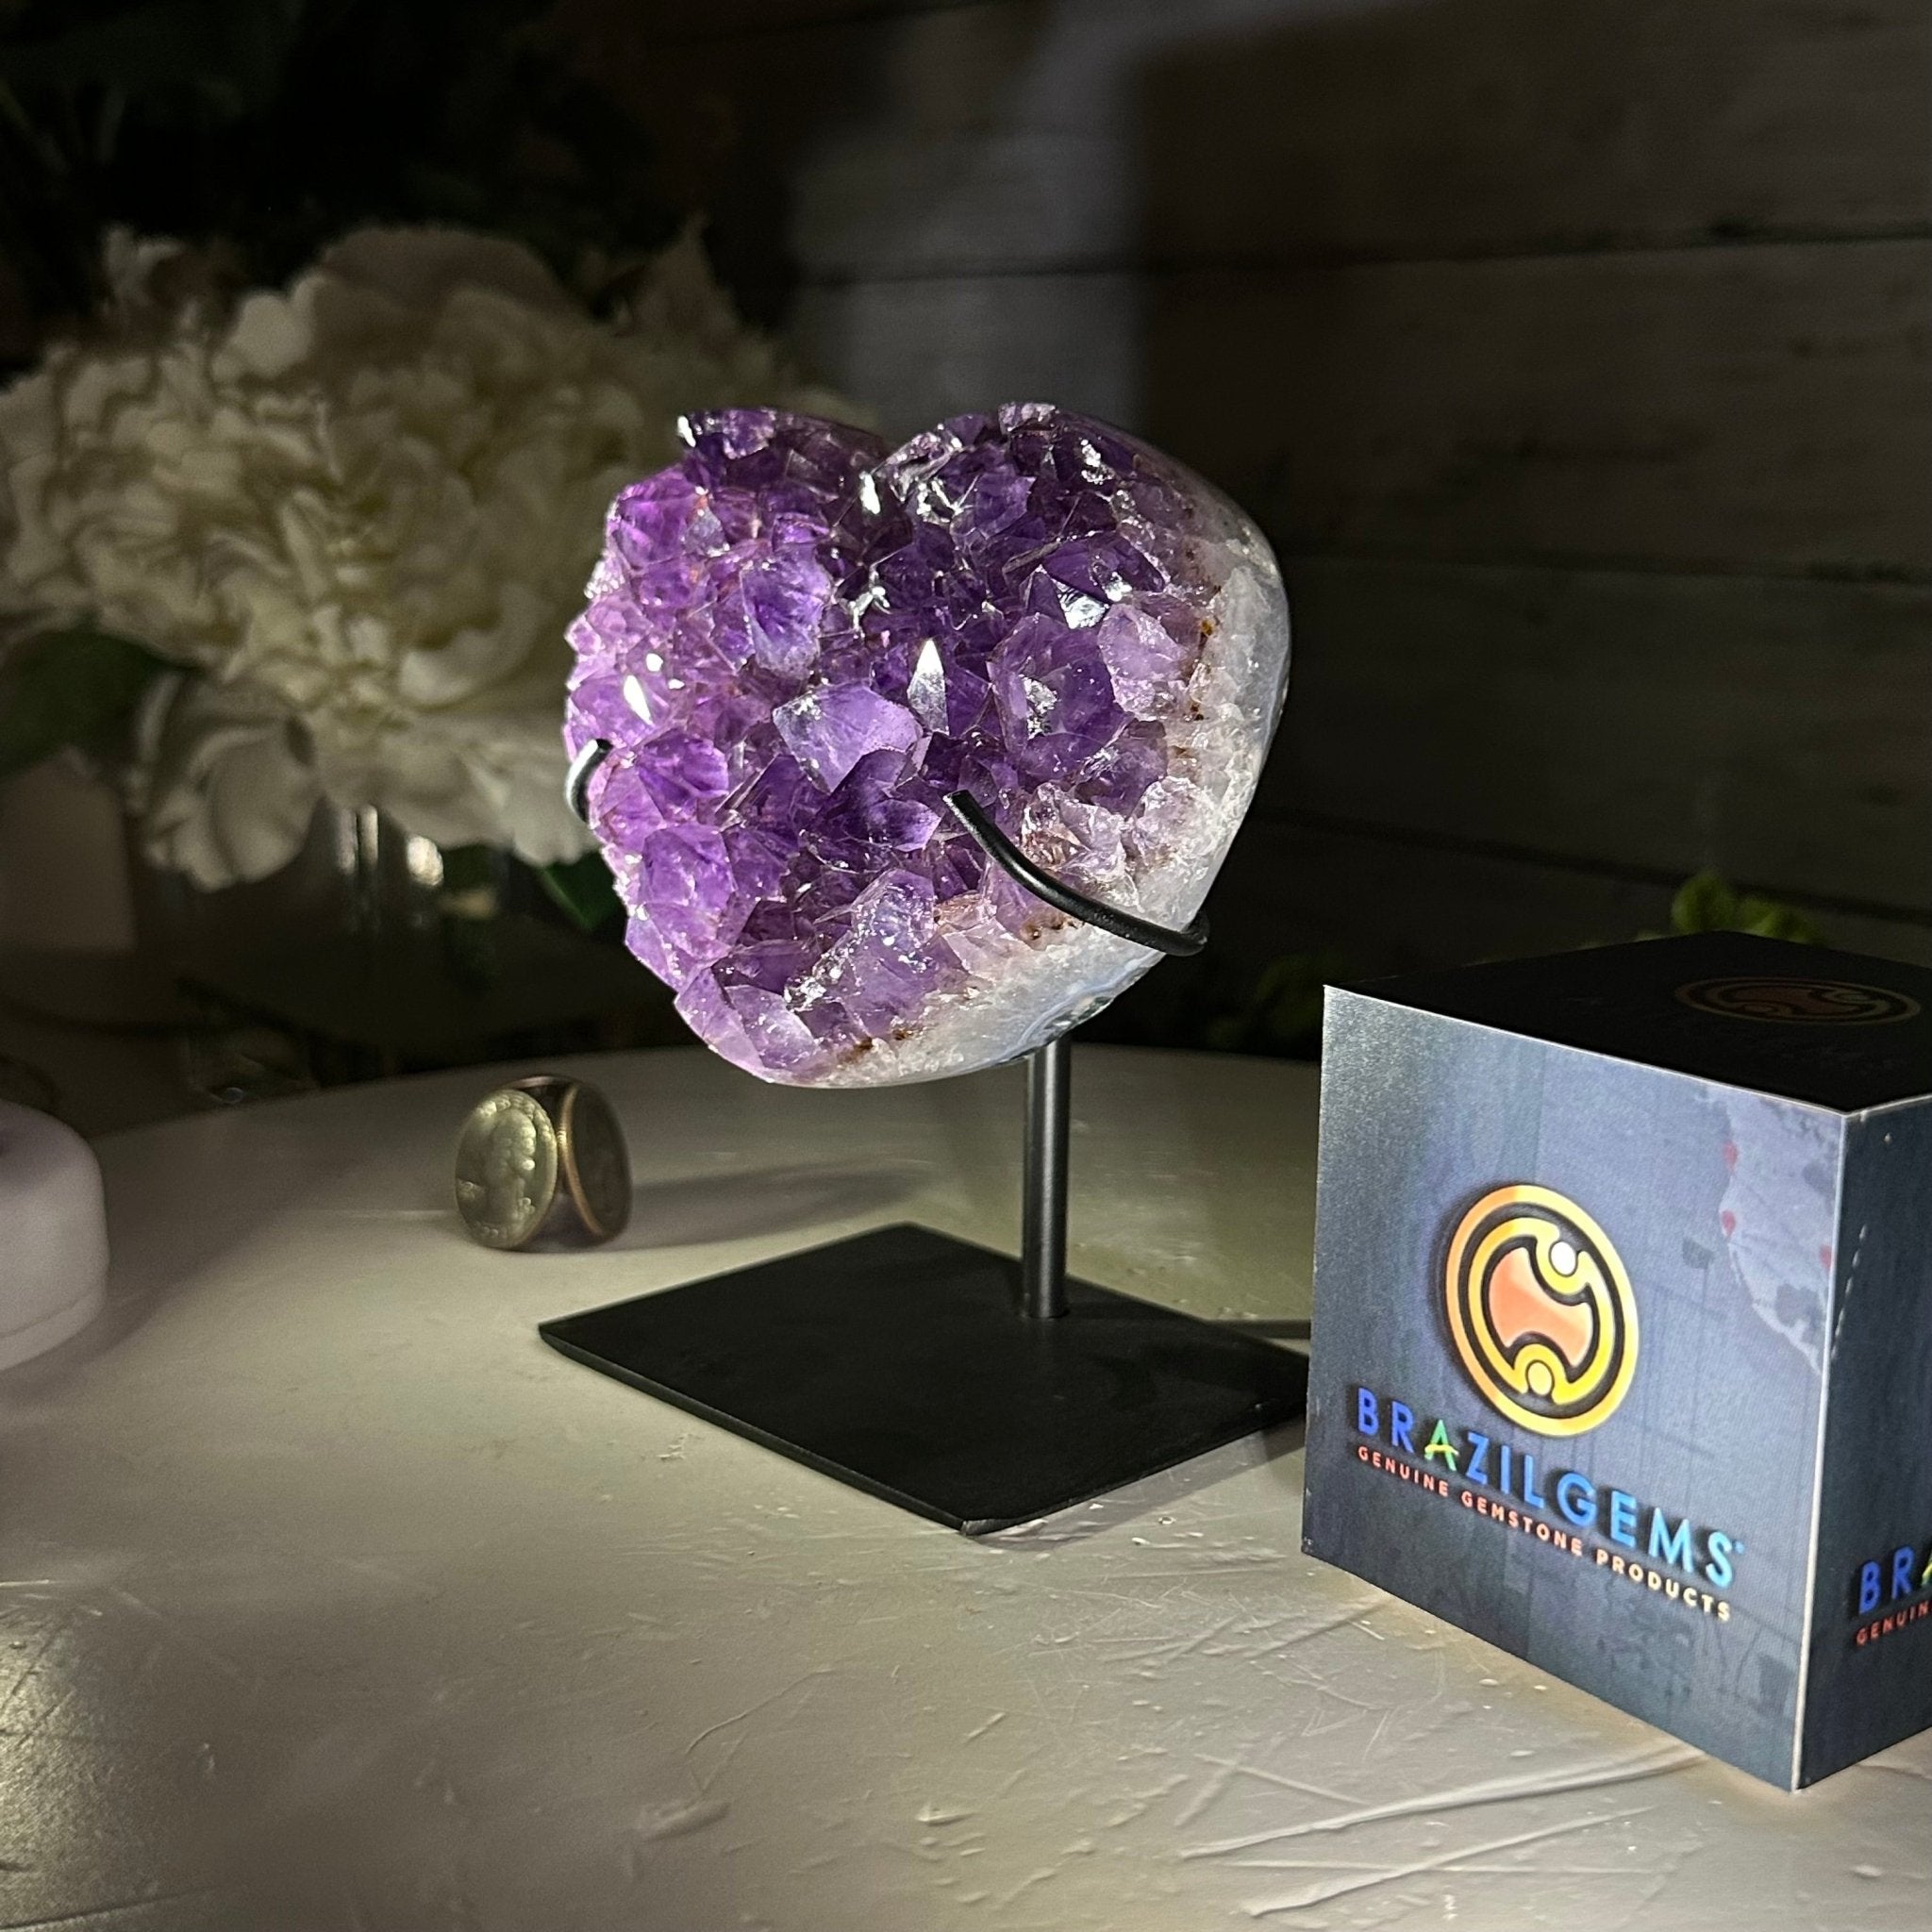 Amethyst Heart Geode w/ metal stand, 1.6 lbs & 5" Tall #5463-0305 - Brazil GemsBrazil GemsAmethyst Heart Geode w/ metal stand, 1.6 lbs & 5" Tall #5463-0305Hearts5463-0305